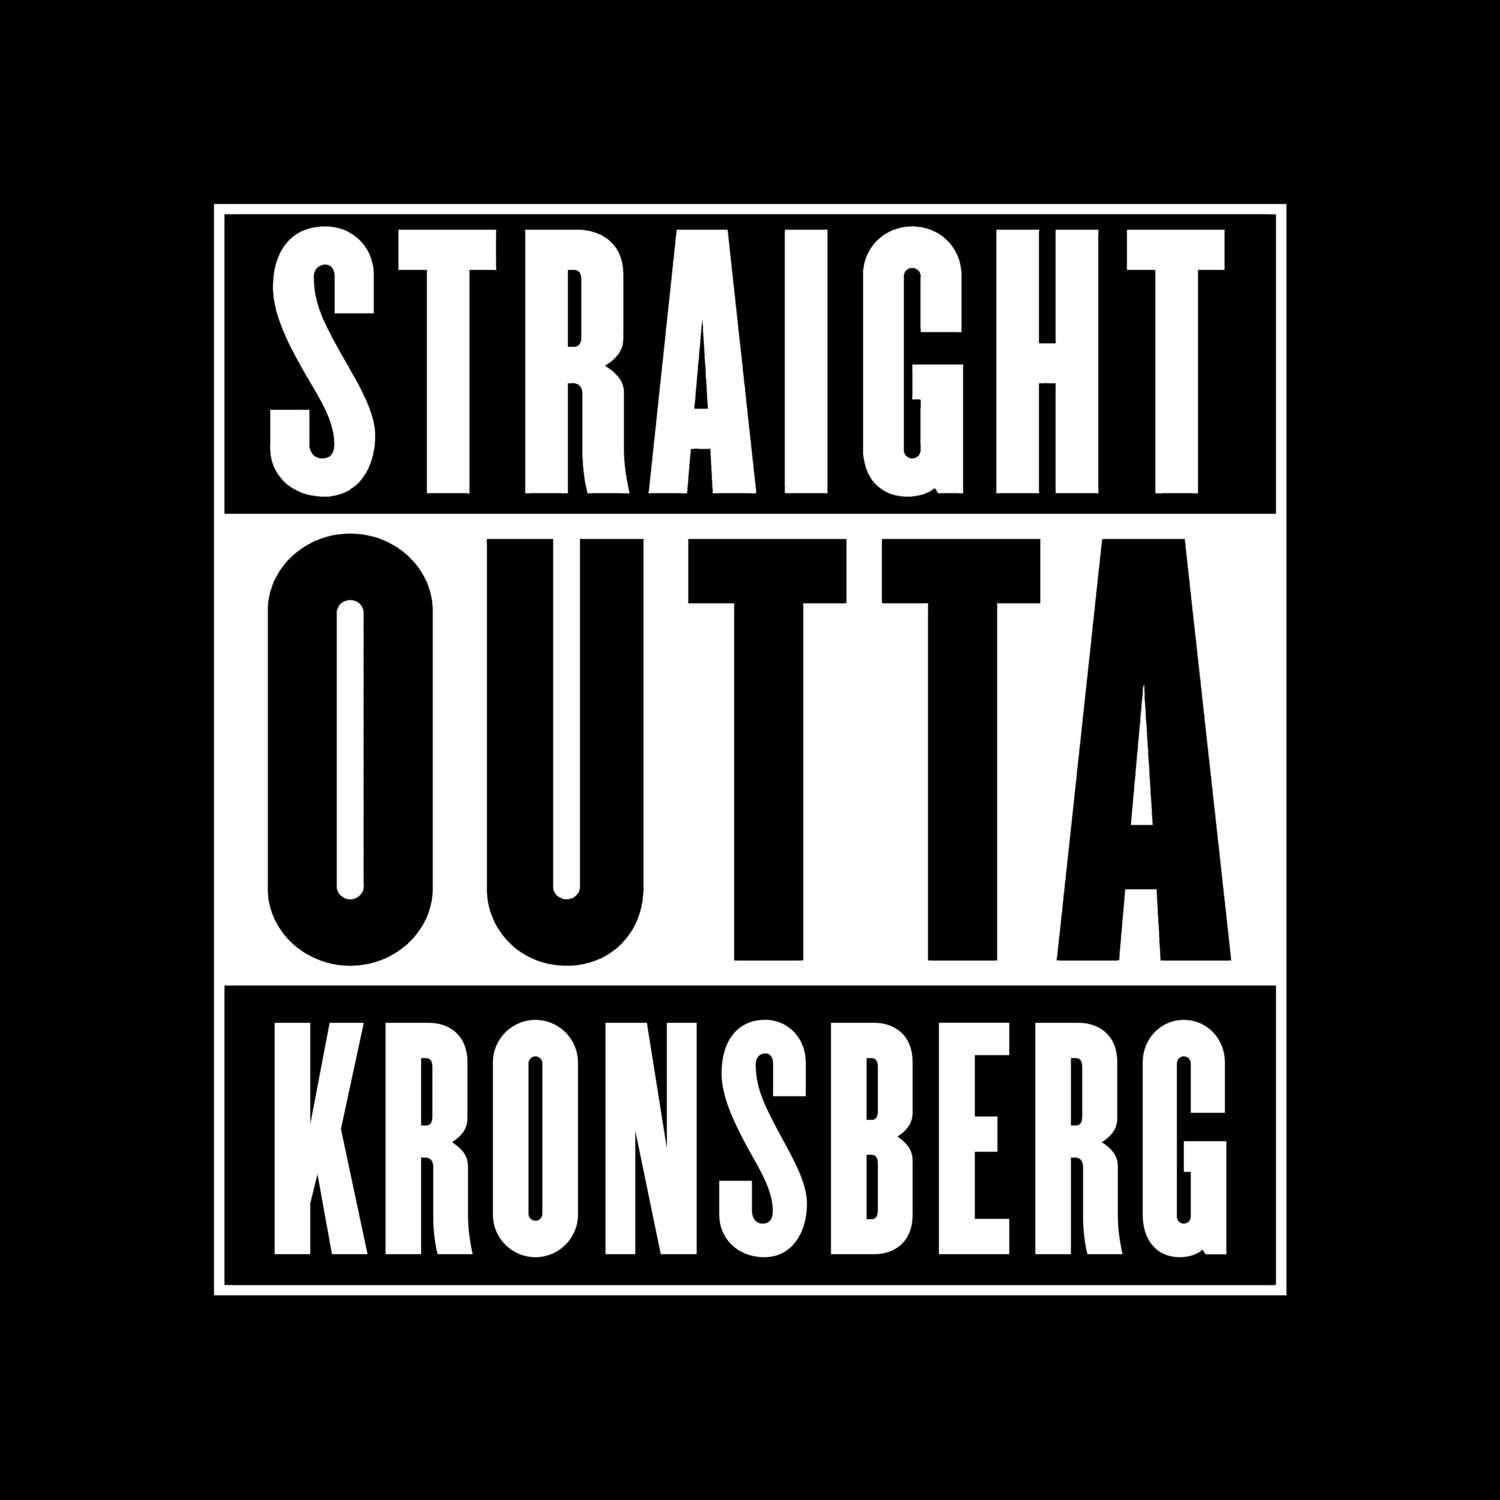 Kronsberg T-Shirt »Straight Outta«